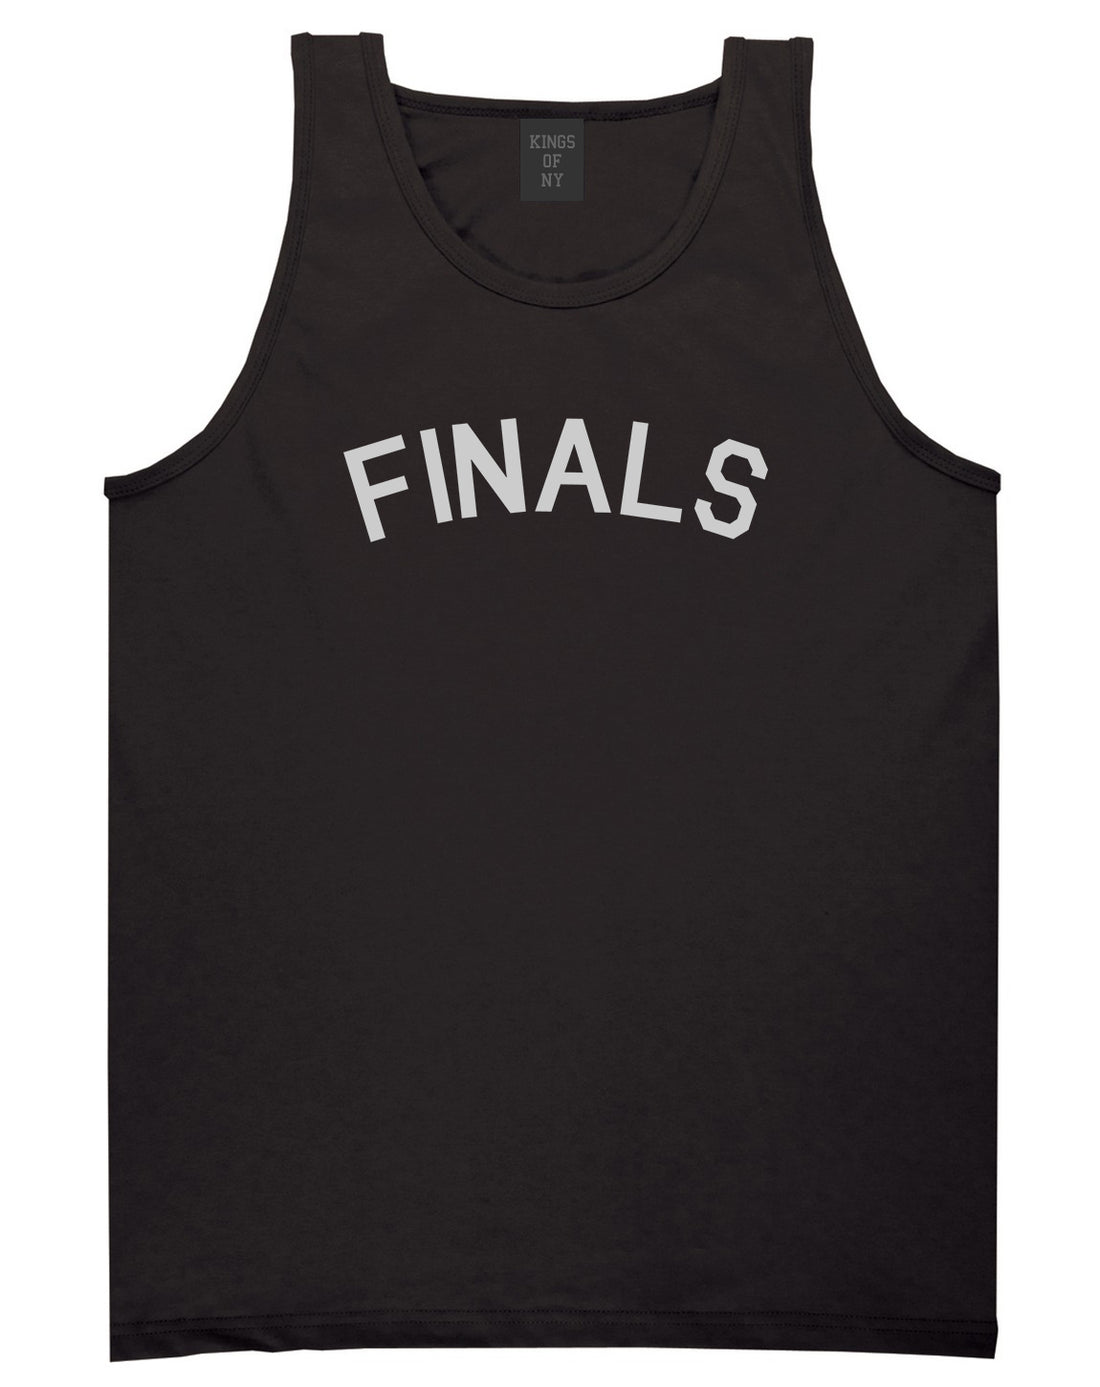 Finals Sports Mens Black Tank Top Shirt by KINGS OF NY